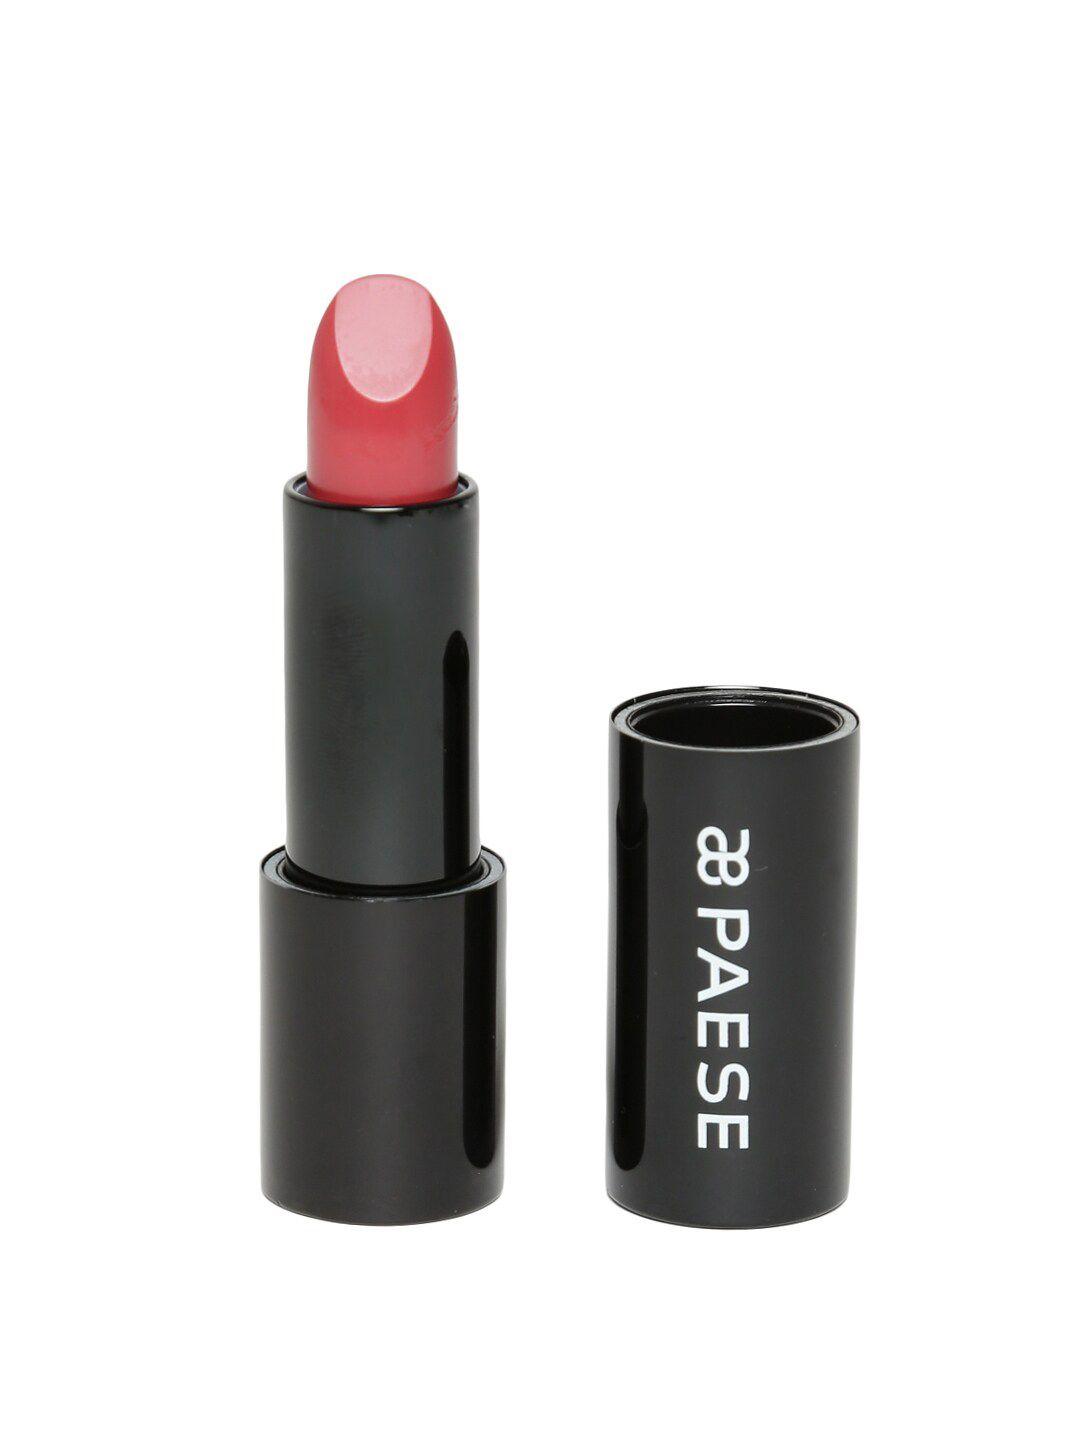 paese cosmetics lipstick with argan oil- 25